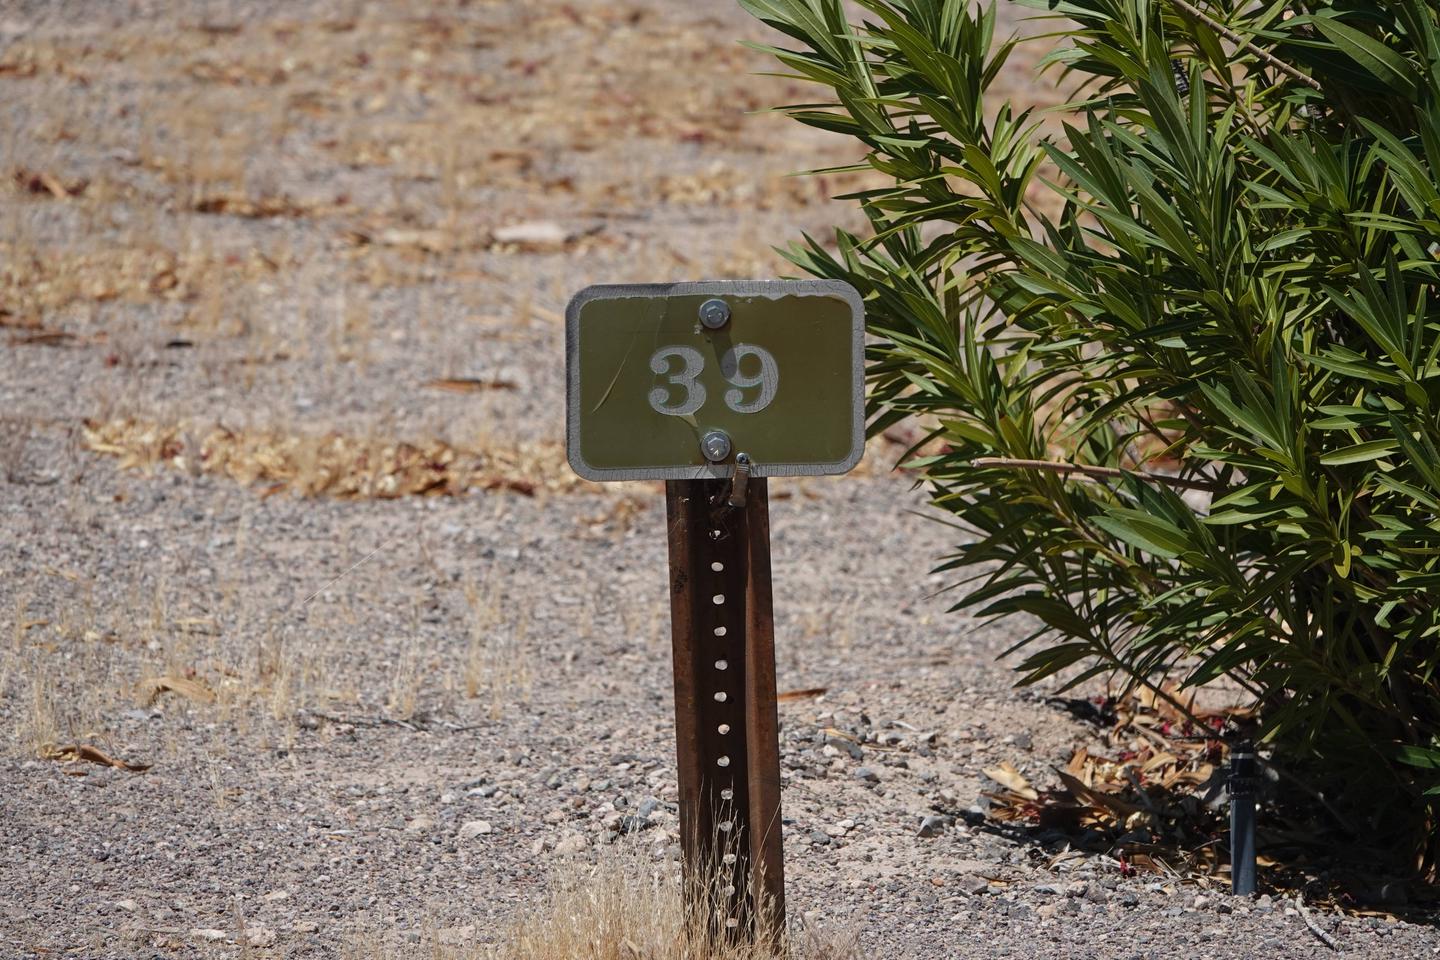 Campsite located in a desert setting1Callville Bay Campground Site 39